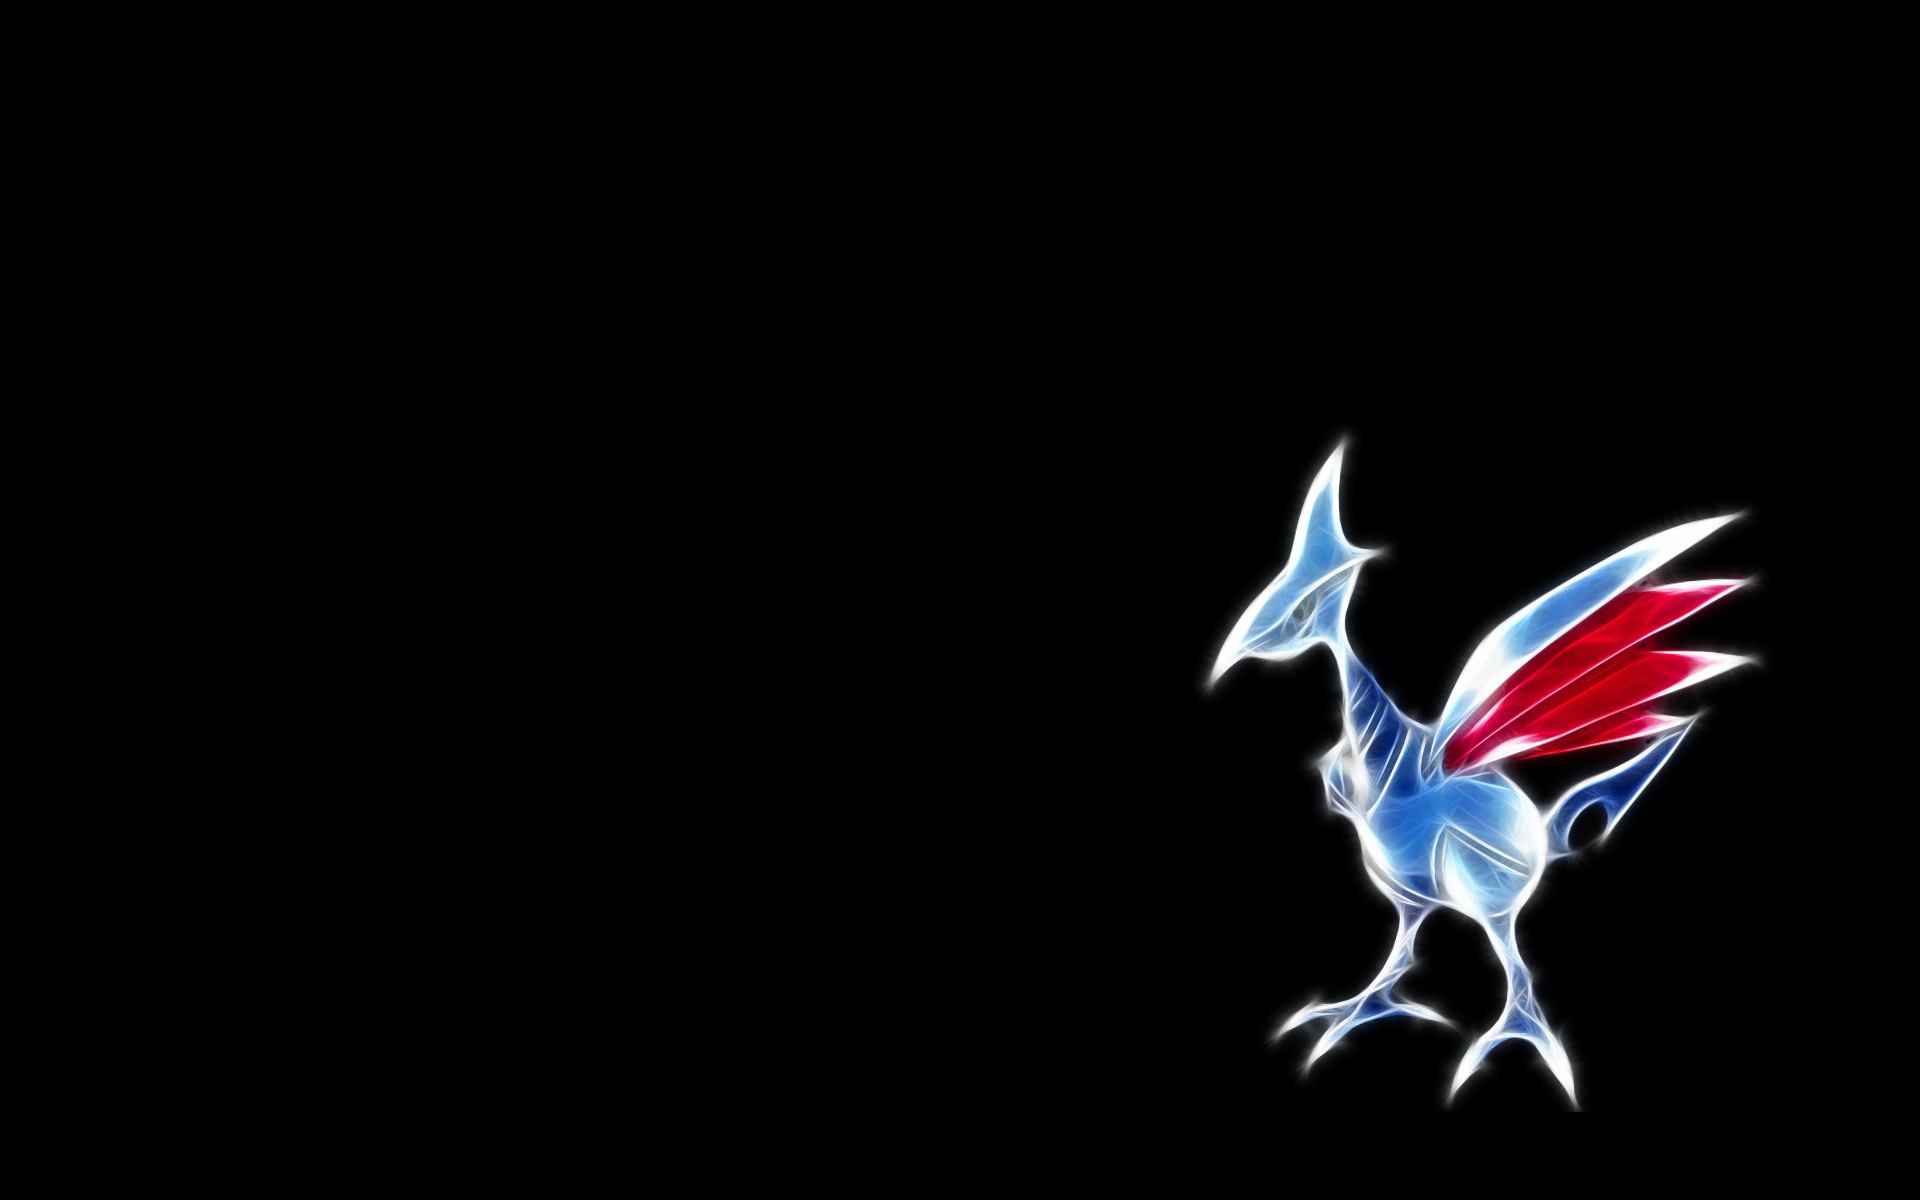 Steel and flying Pokémon Skarmory from the anime Pokémon in a desktop wallpaper.